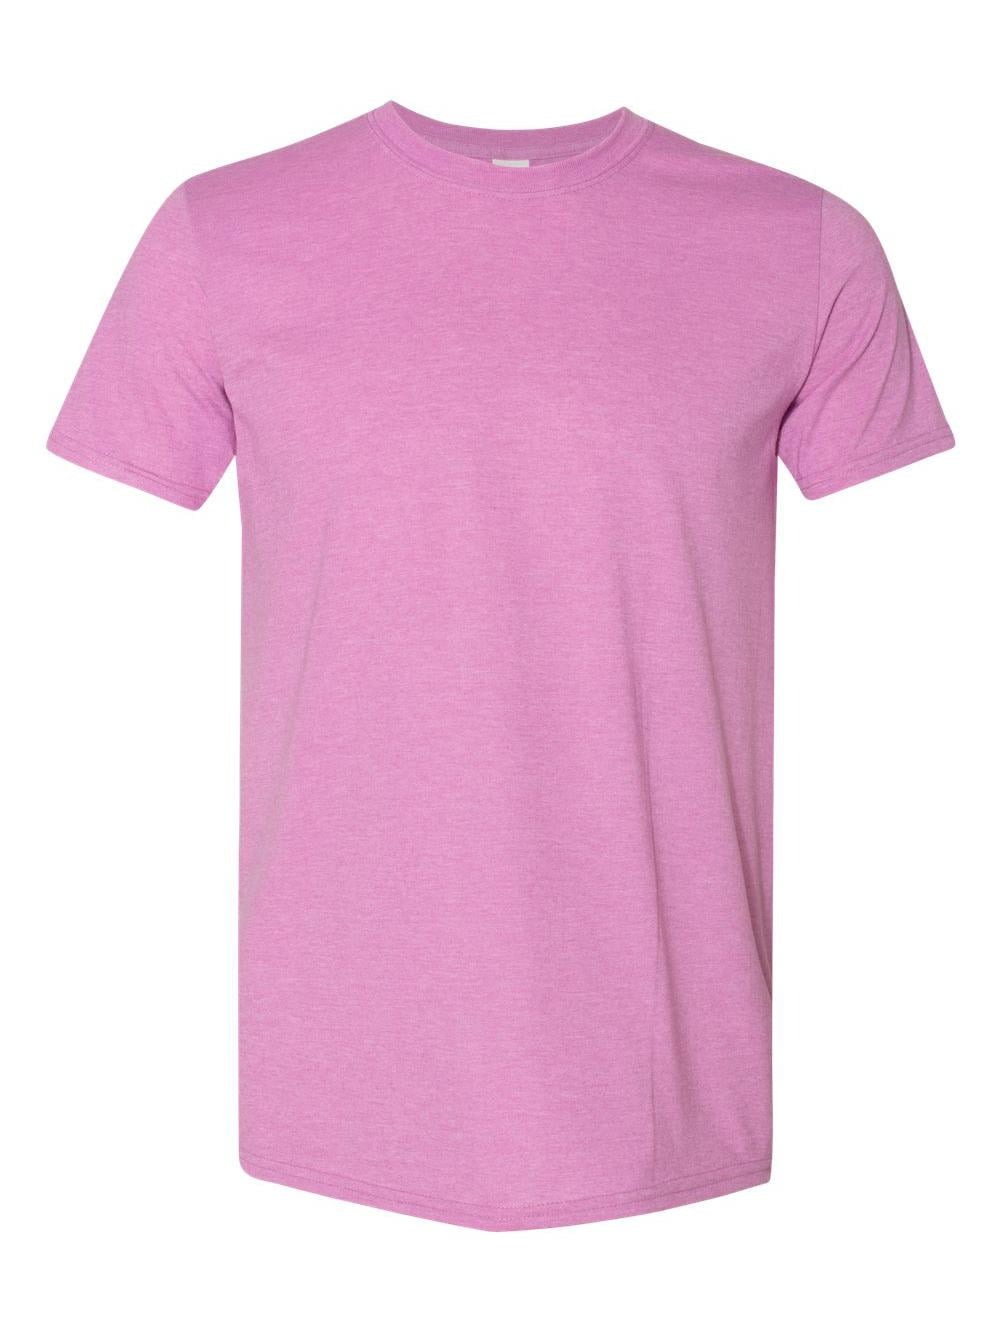 Gildan - Softstyle T-Shirt - 64000 - Natural - Size: L 